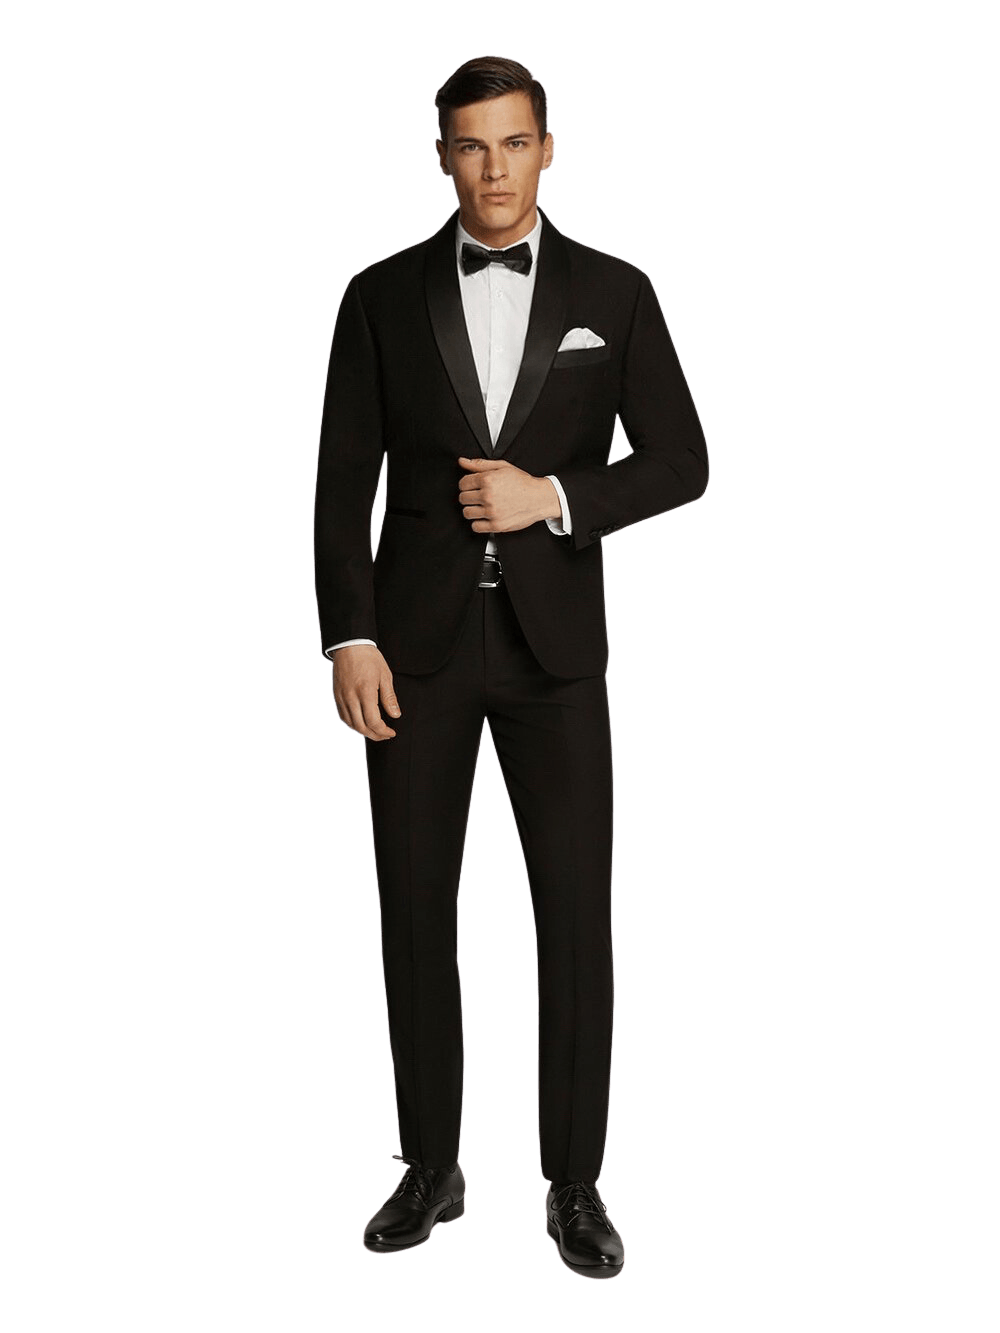 Black Tuxedo Satin Lapel Dinner Suit